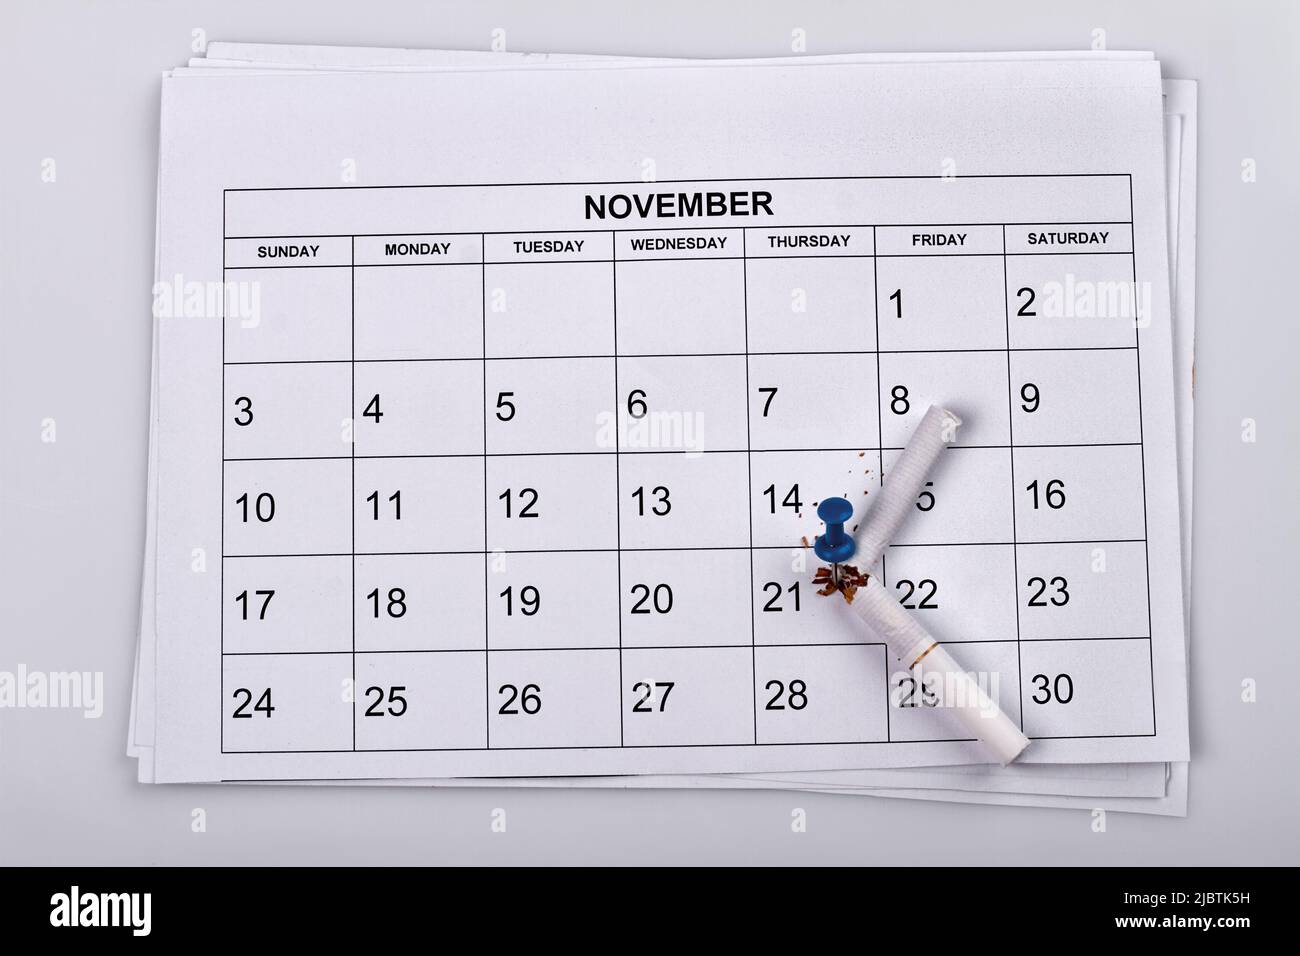 Broken cigarette with push pin on the month calendar. November calendar on white background. Stock Photo